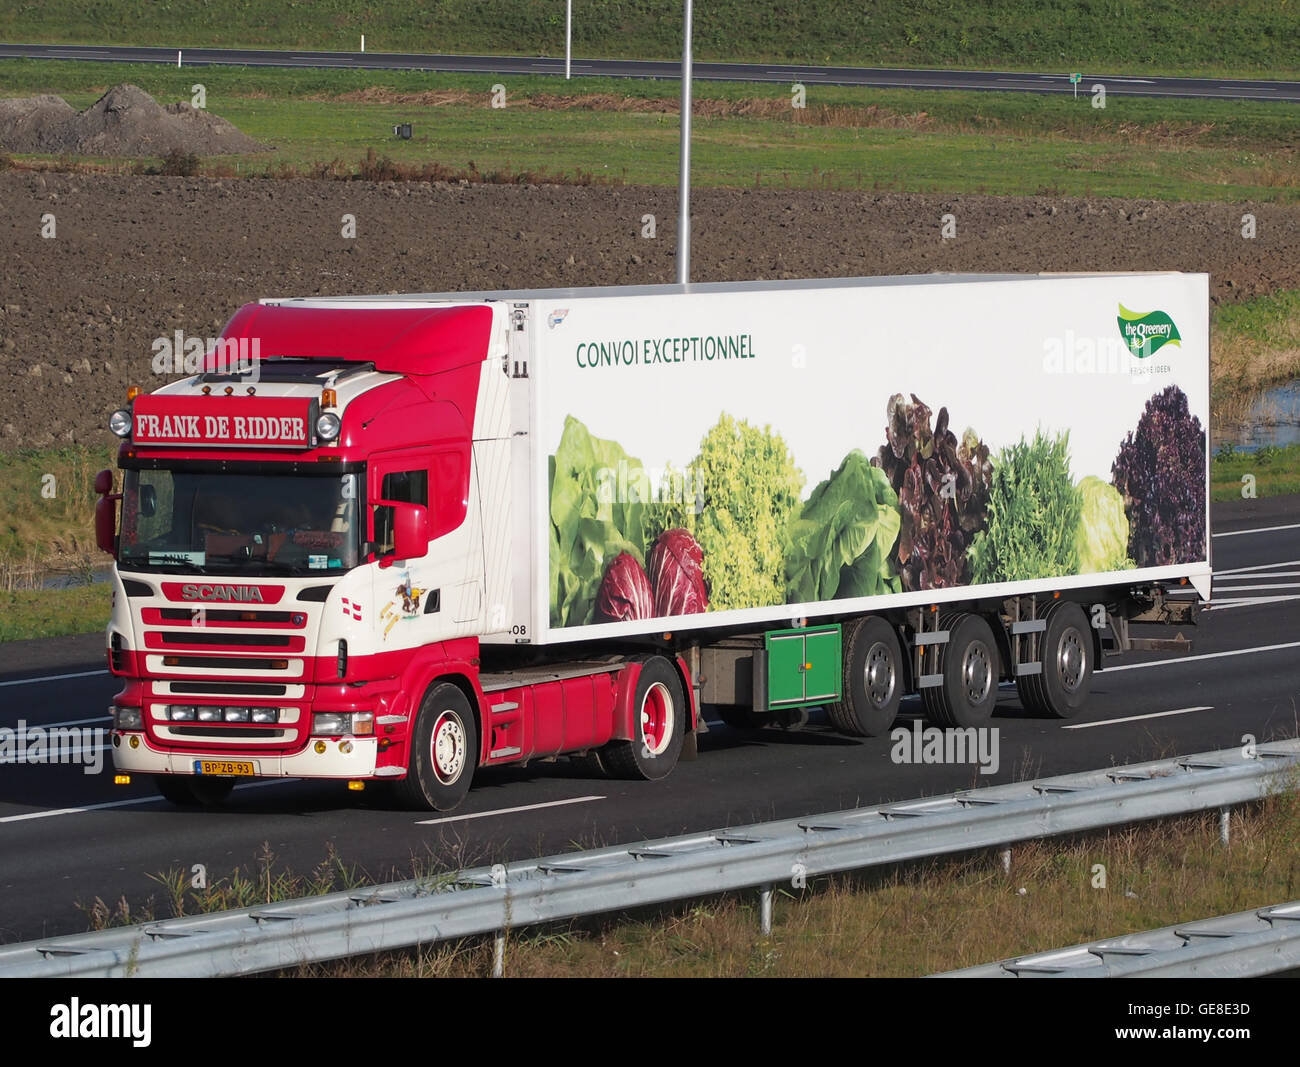 Scania, Frank de Ridder, The Greenery Stockfoto